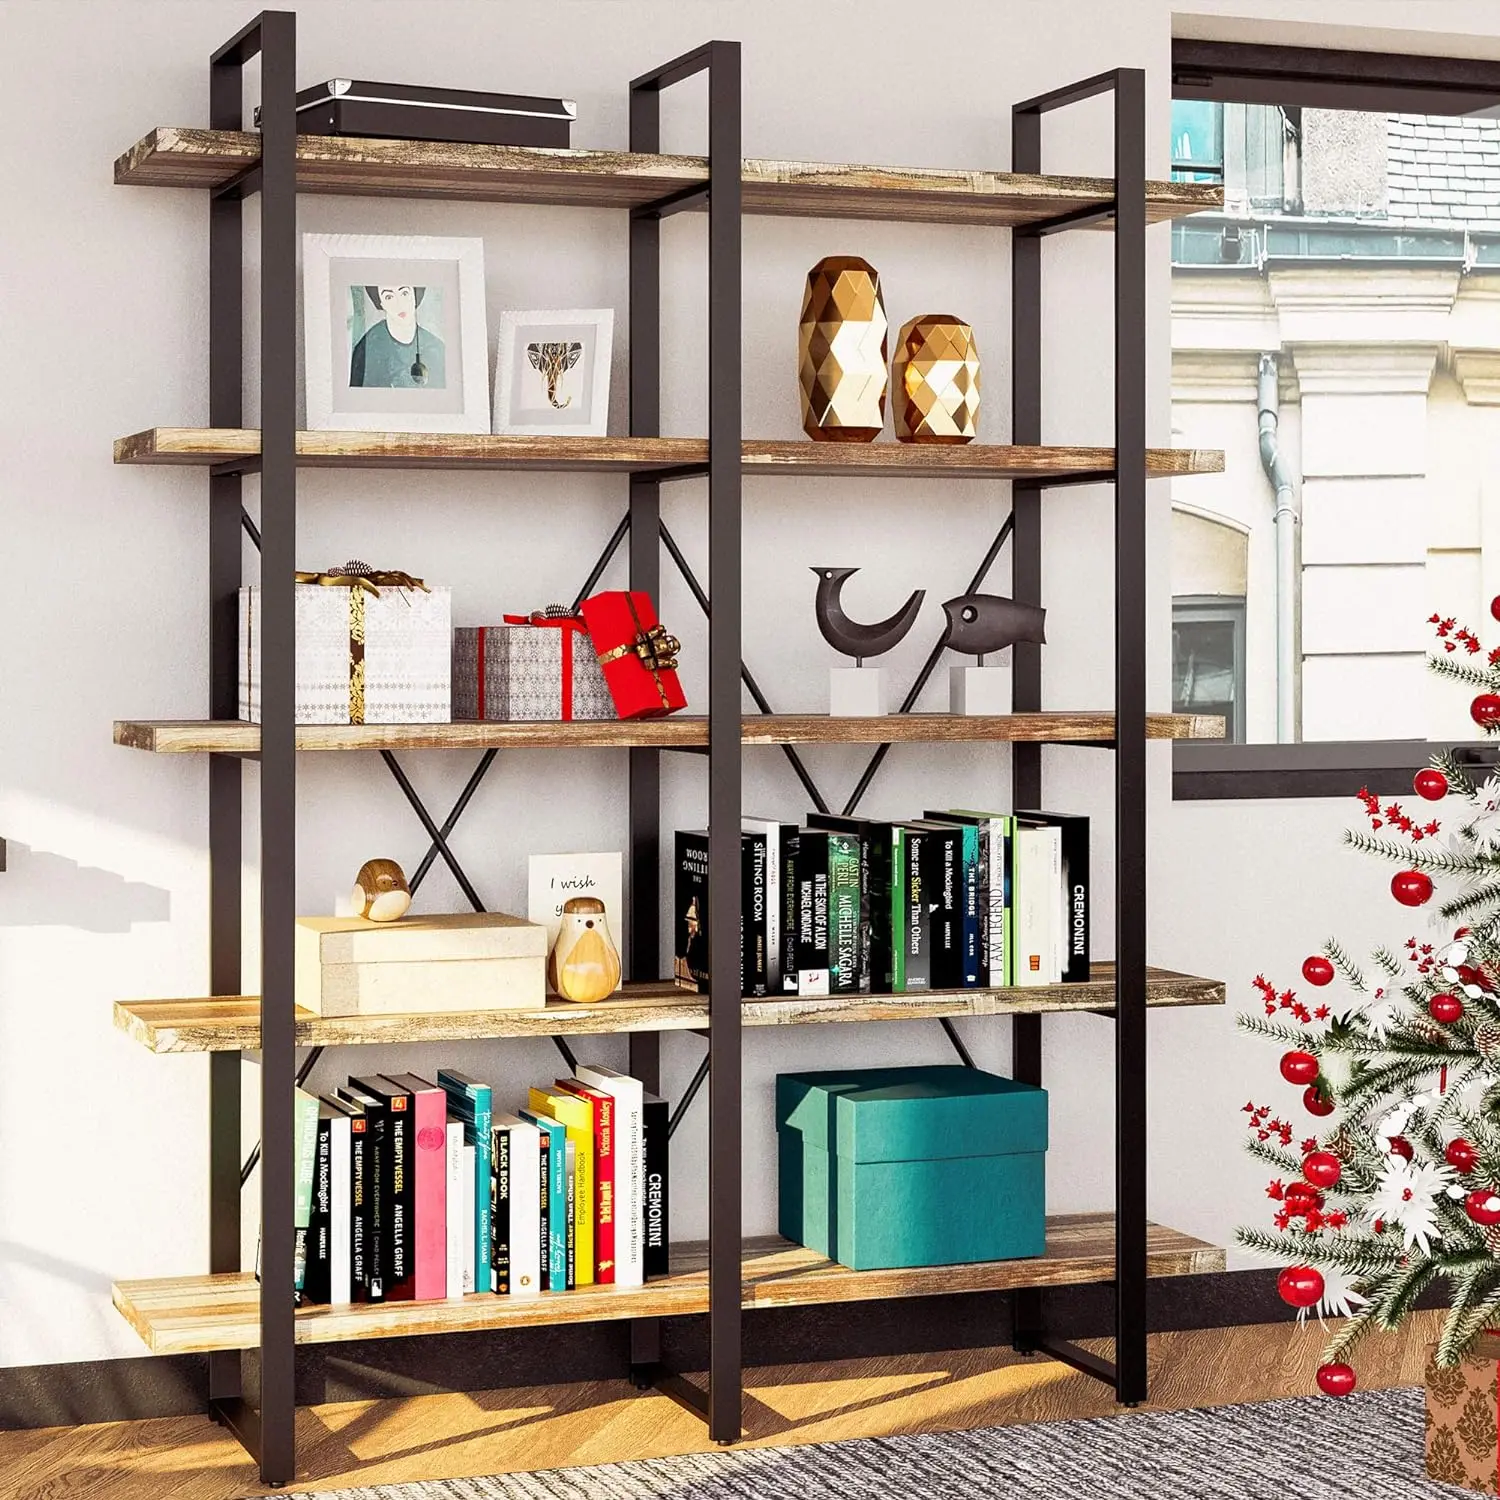 

IRONCK Bookshelf, Double Wide 5-Tier Open Bookcase Vintage Industrial Large Shelves, Wood and Metal Etagere Bookshelves,